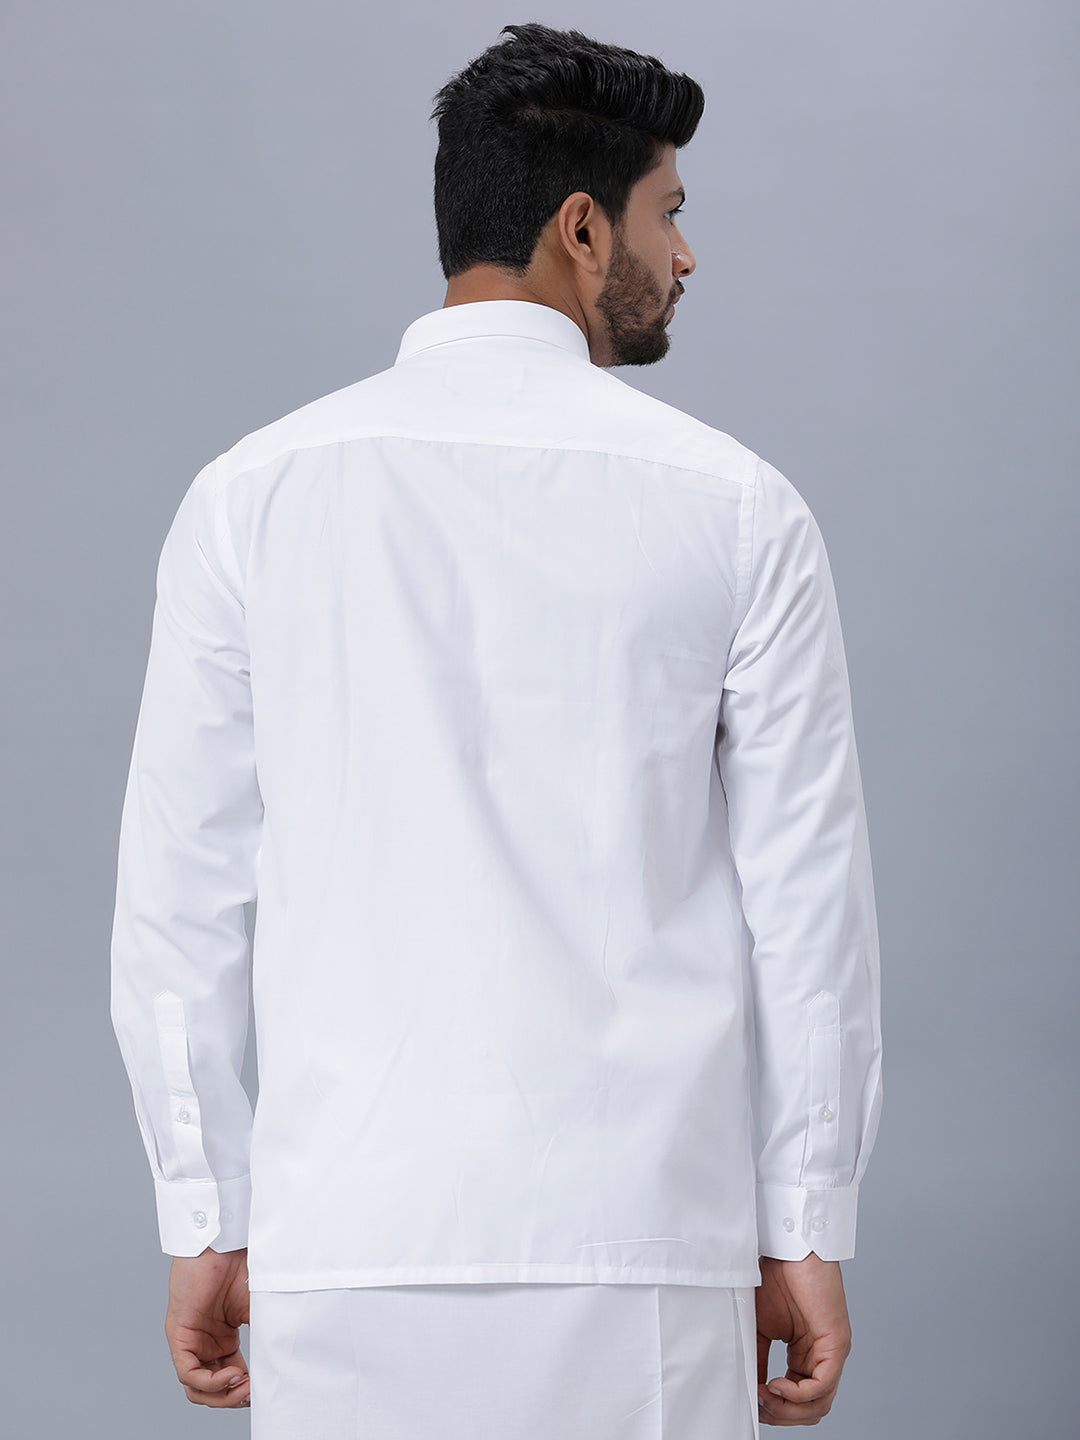 Mens Premium Pure Cotton White Shirt - Ultimate R7